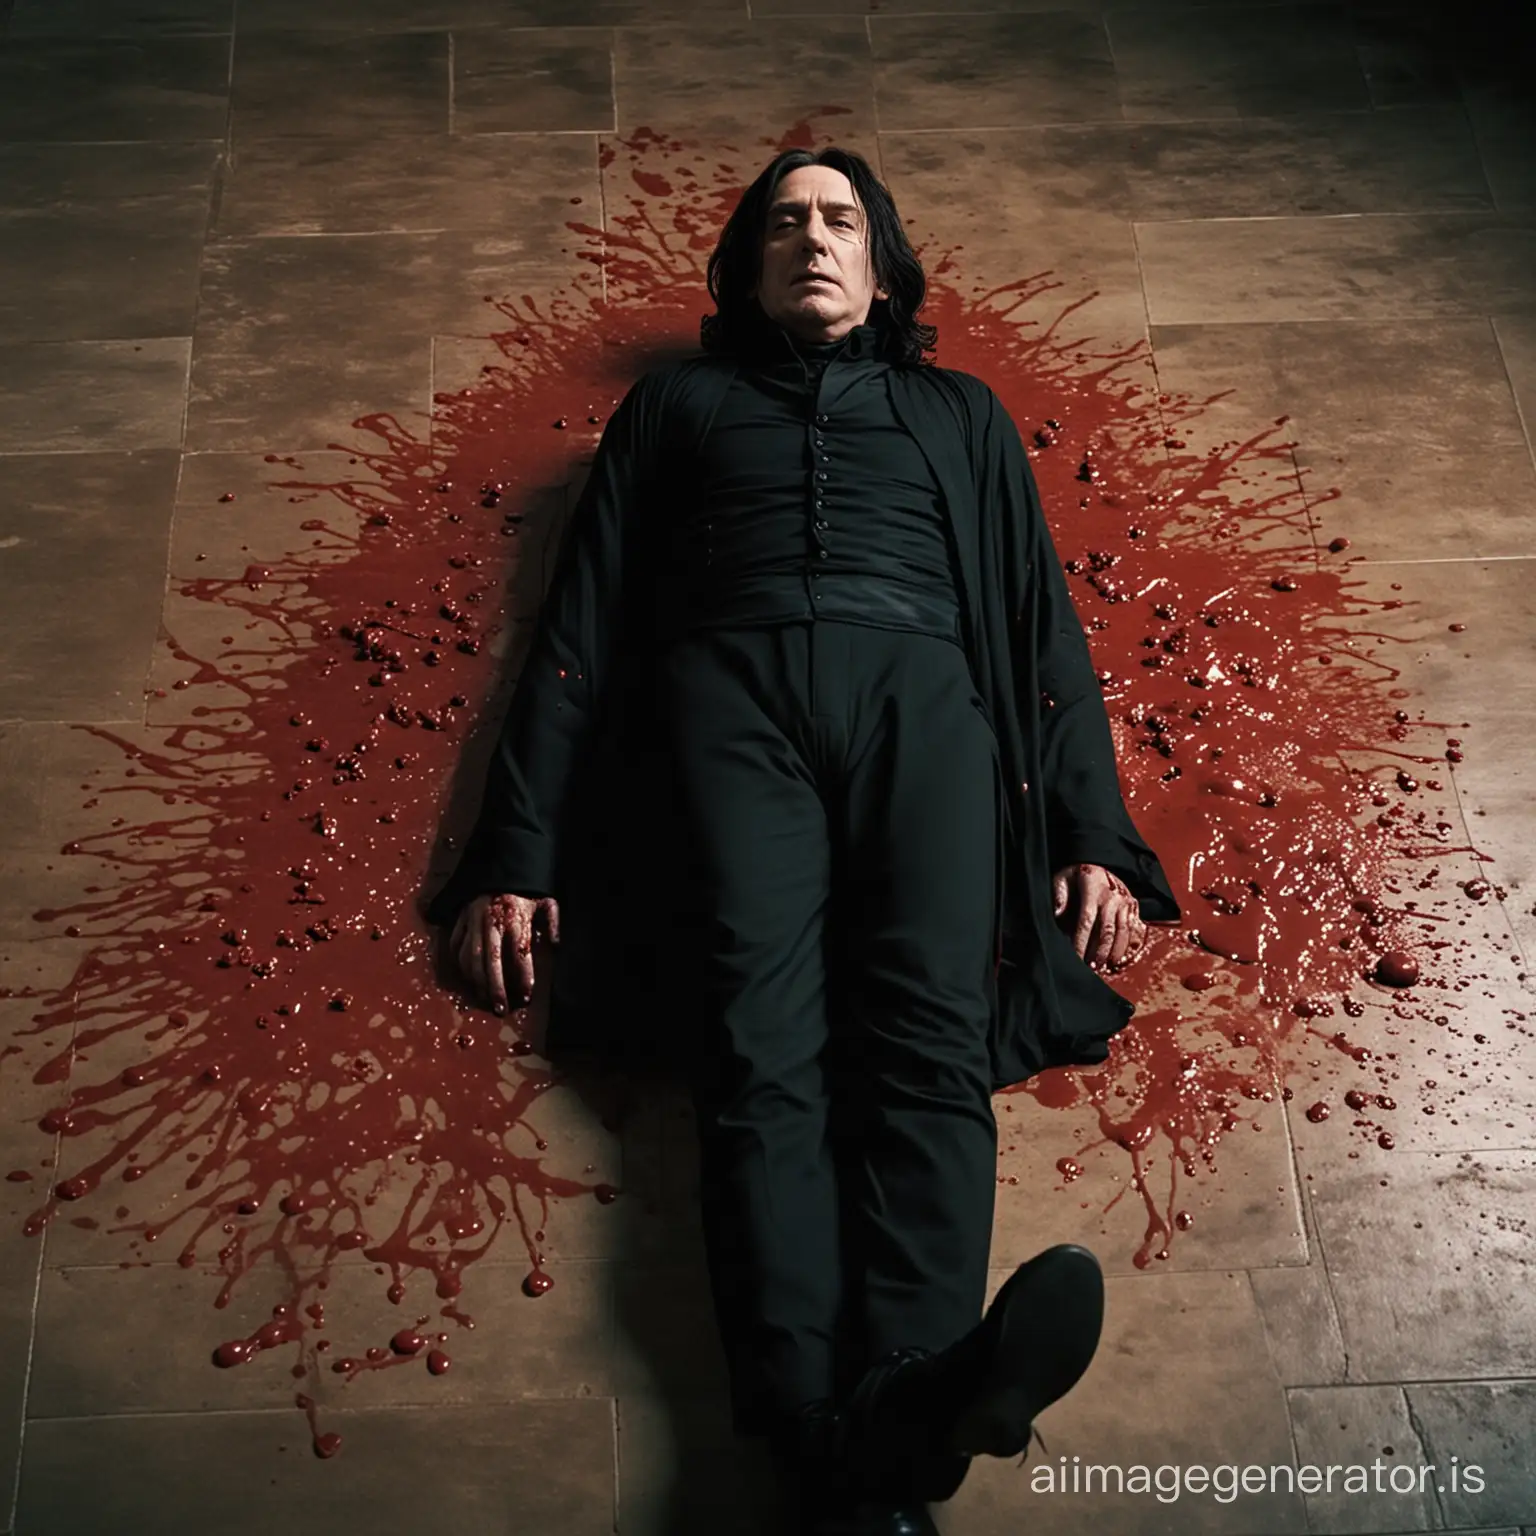 Severus-Snape-Lying-Dead-in-Pool-of-Blood